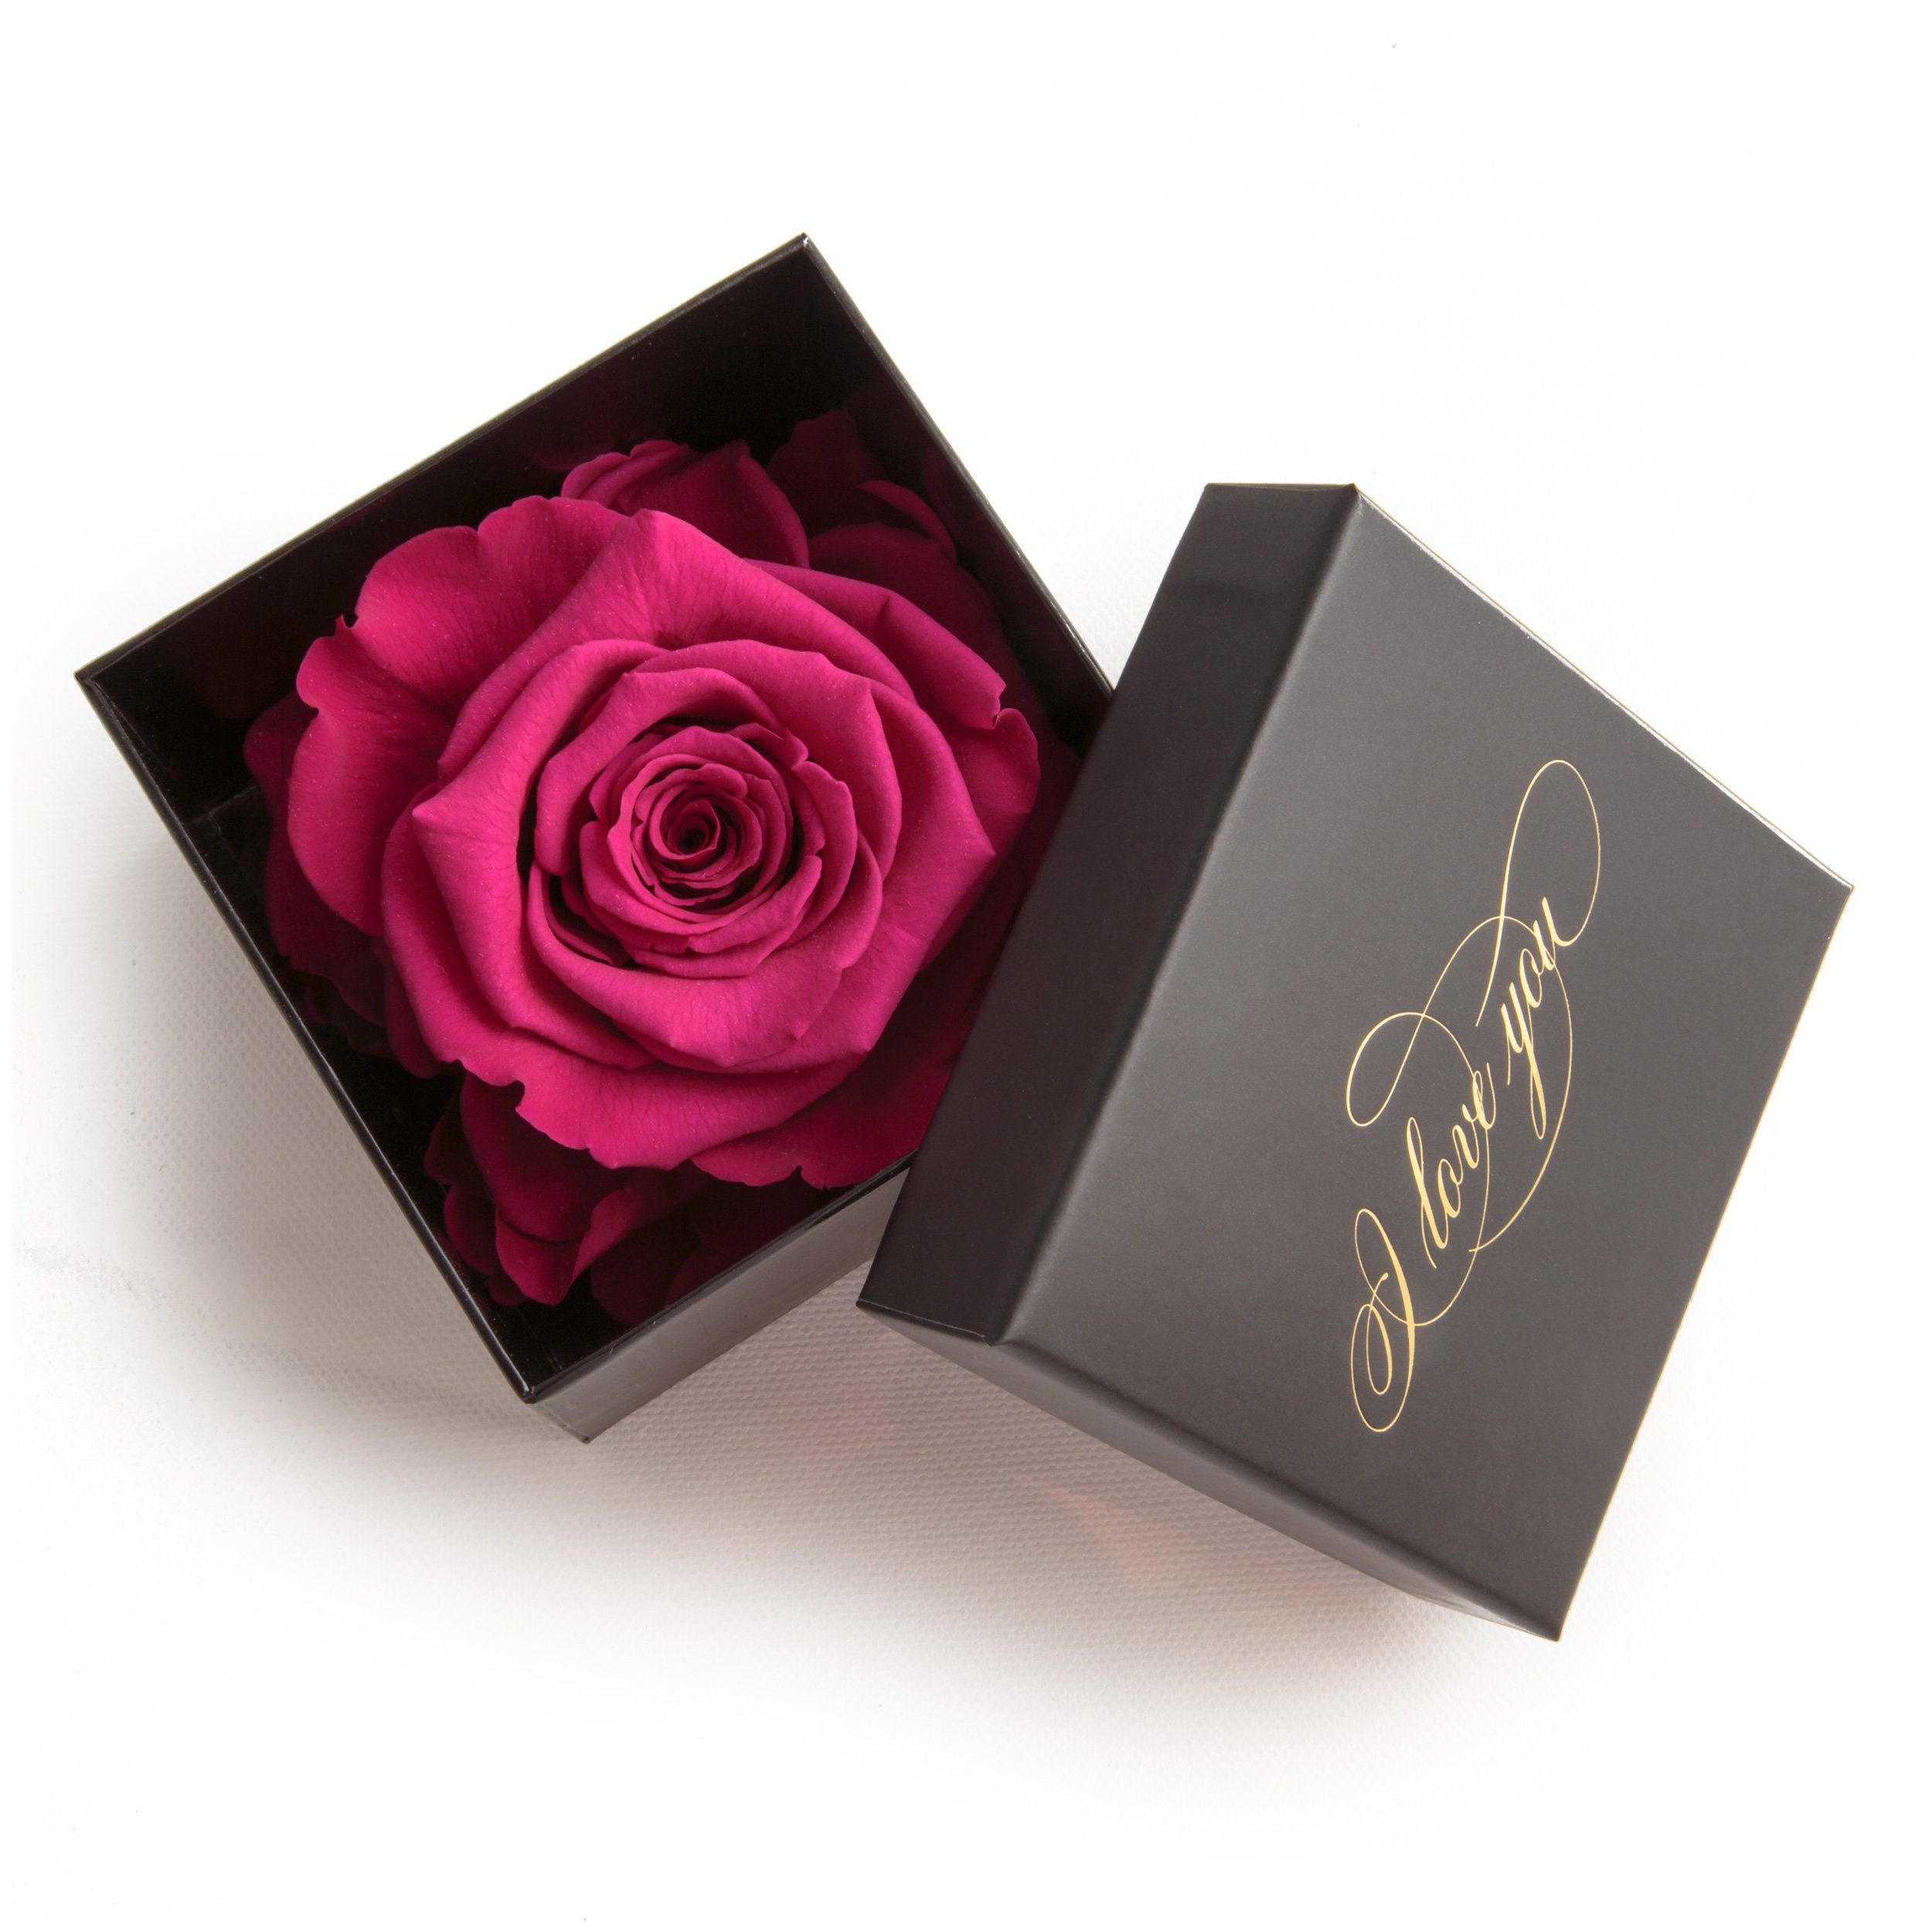 Kunstblume Infinity Rose Box I Love You Geschenk Idee Liebesbeweis Rose, ROSEMARIE SCHULZ Heidelberg, Höhe 6 cm, Echte Rose konserviert Pink